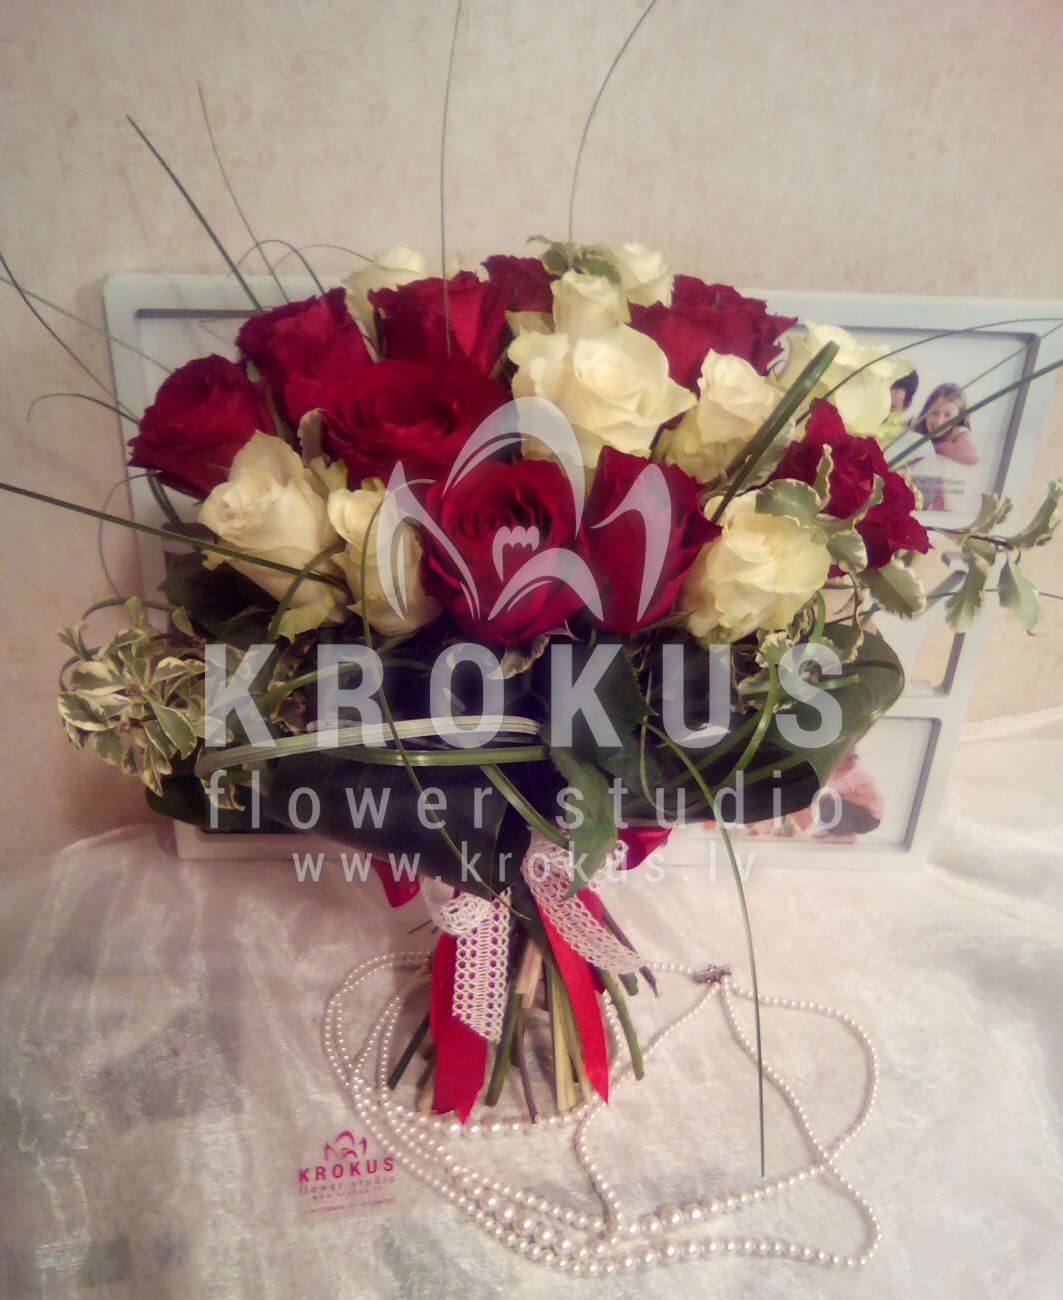 Deliver flowers to Latvia (shrub rosessunflowersmeadow flowersgoldenrodchrysanthemumshypericumdaisies)